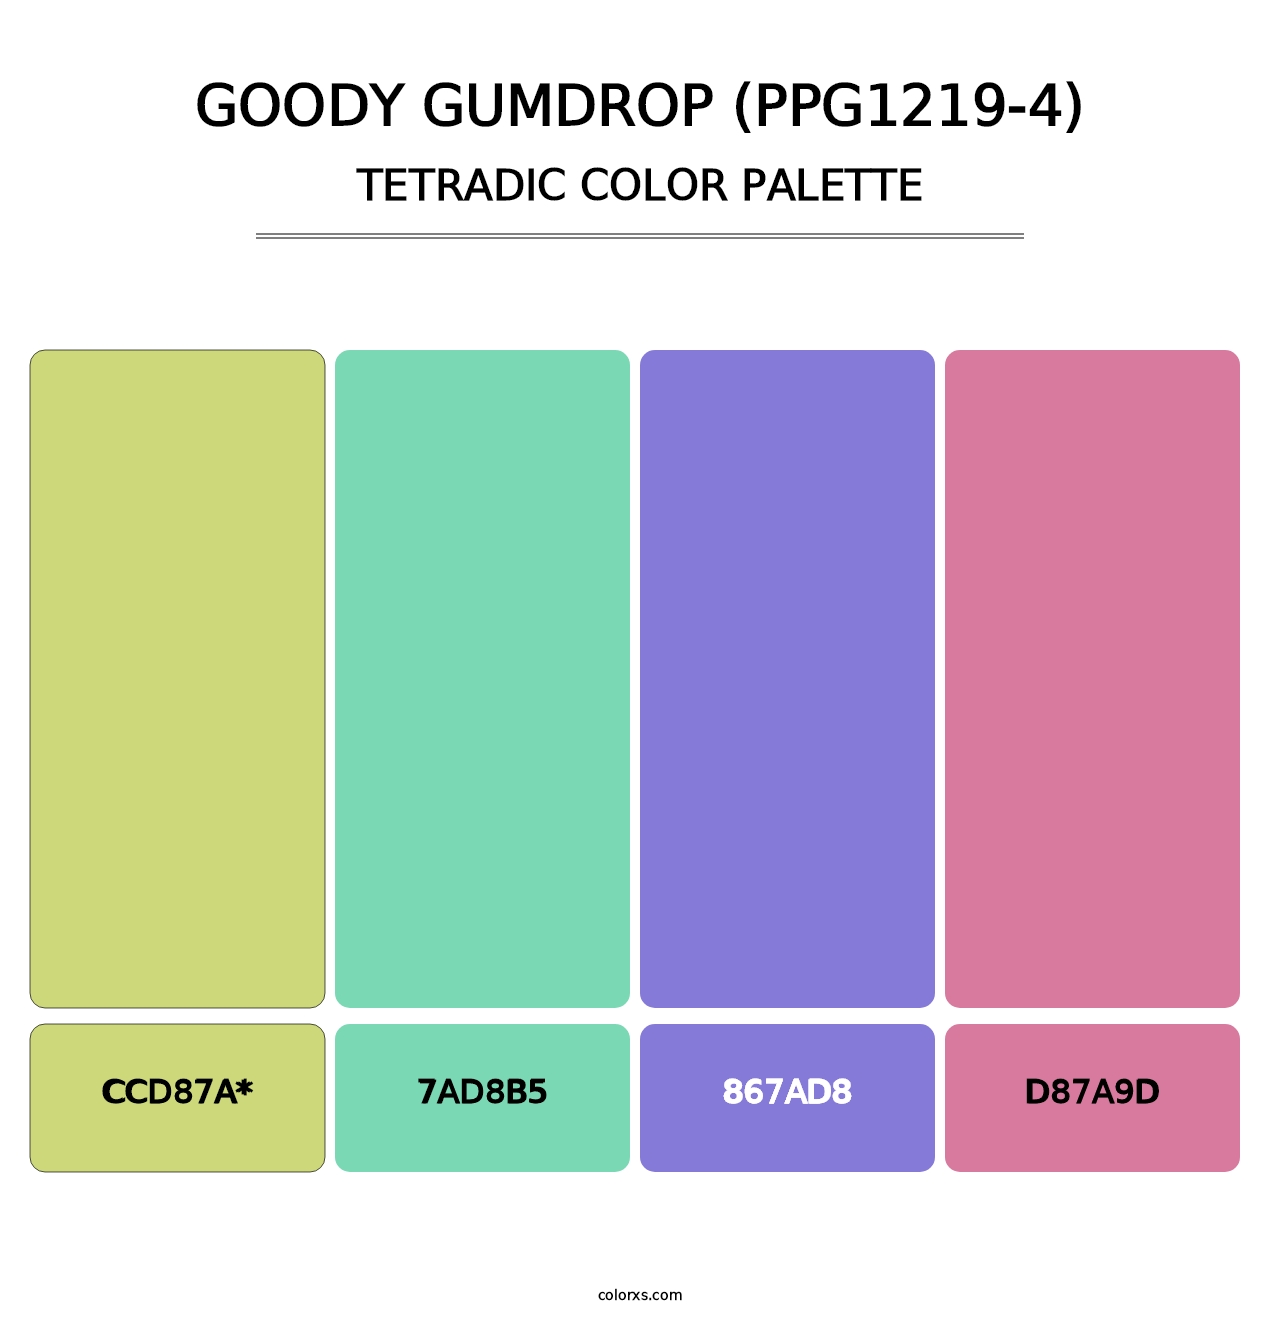 Goody Gumdrop (PPG1219-4) - Tetradic Color Palette